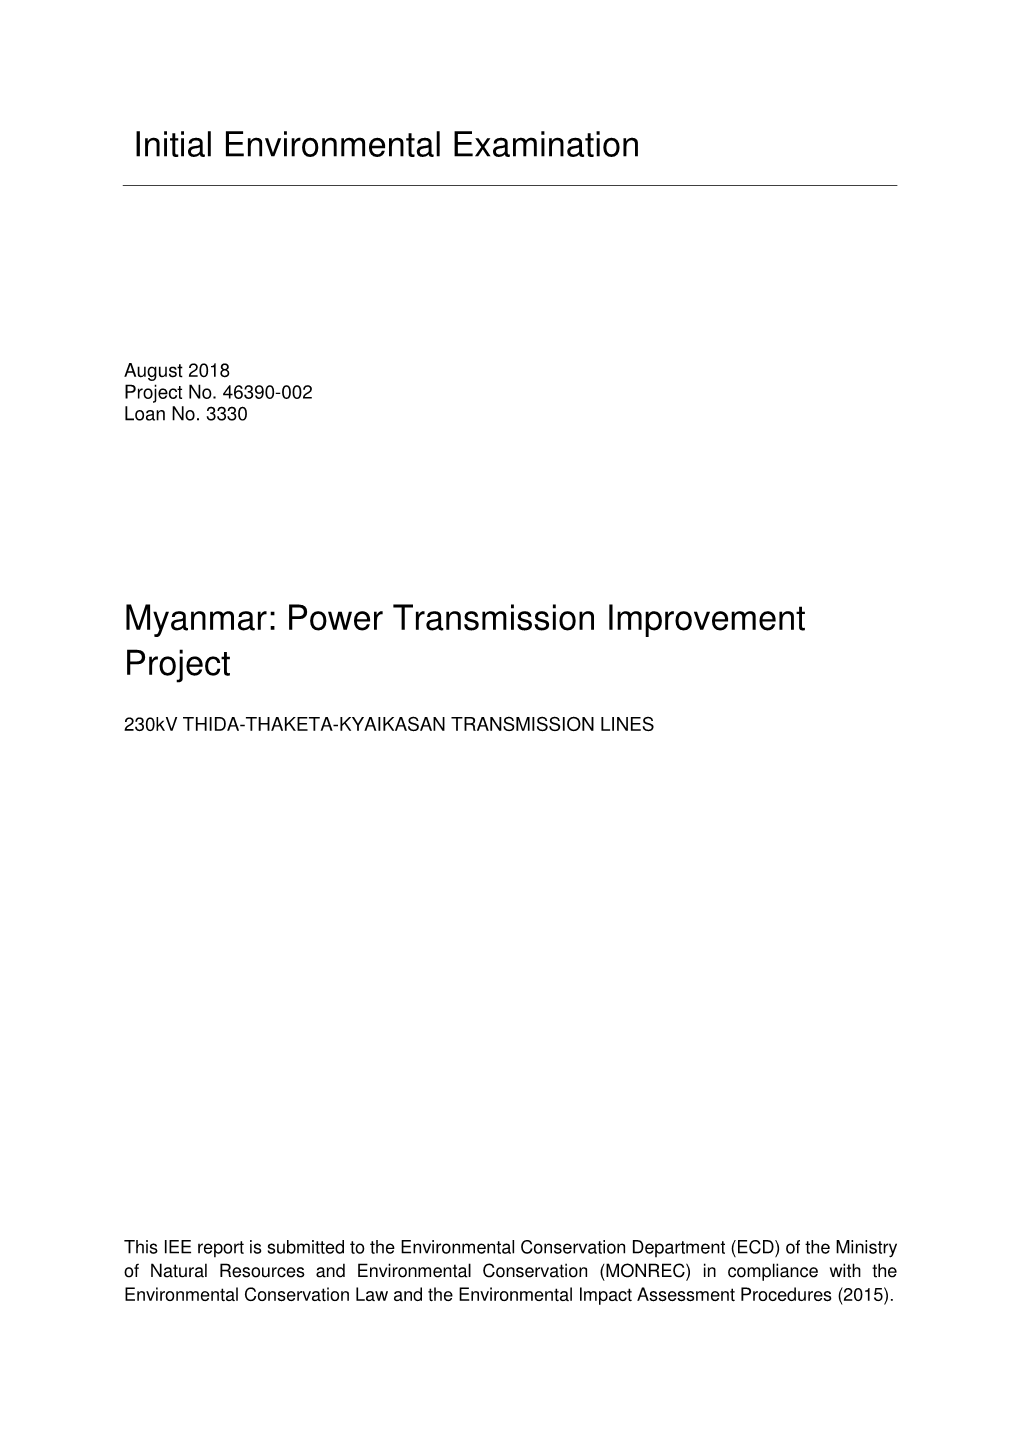 46390-002: Power Transmission Improvement Project